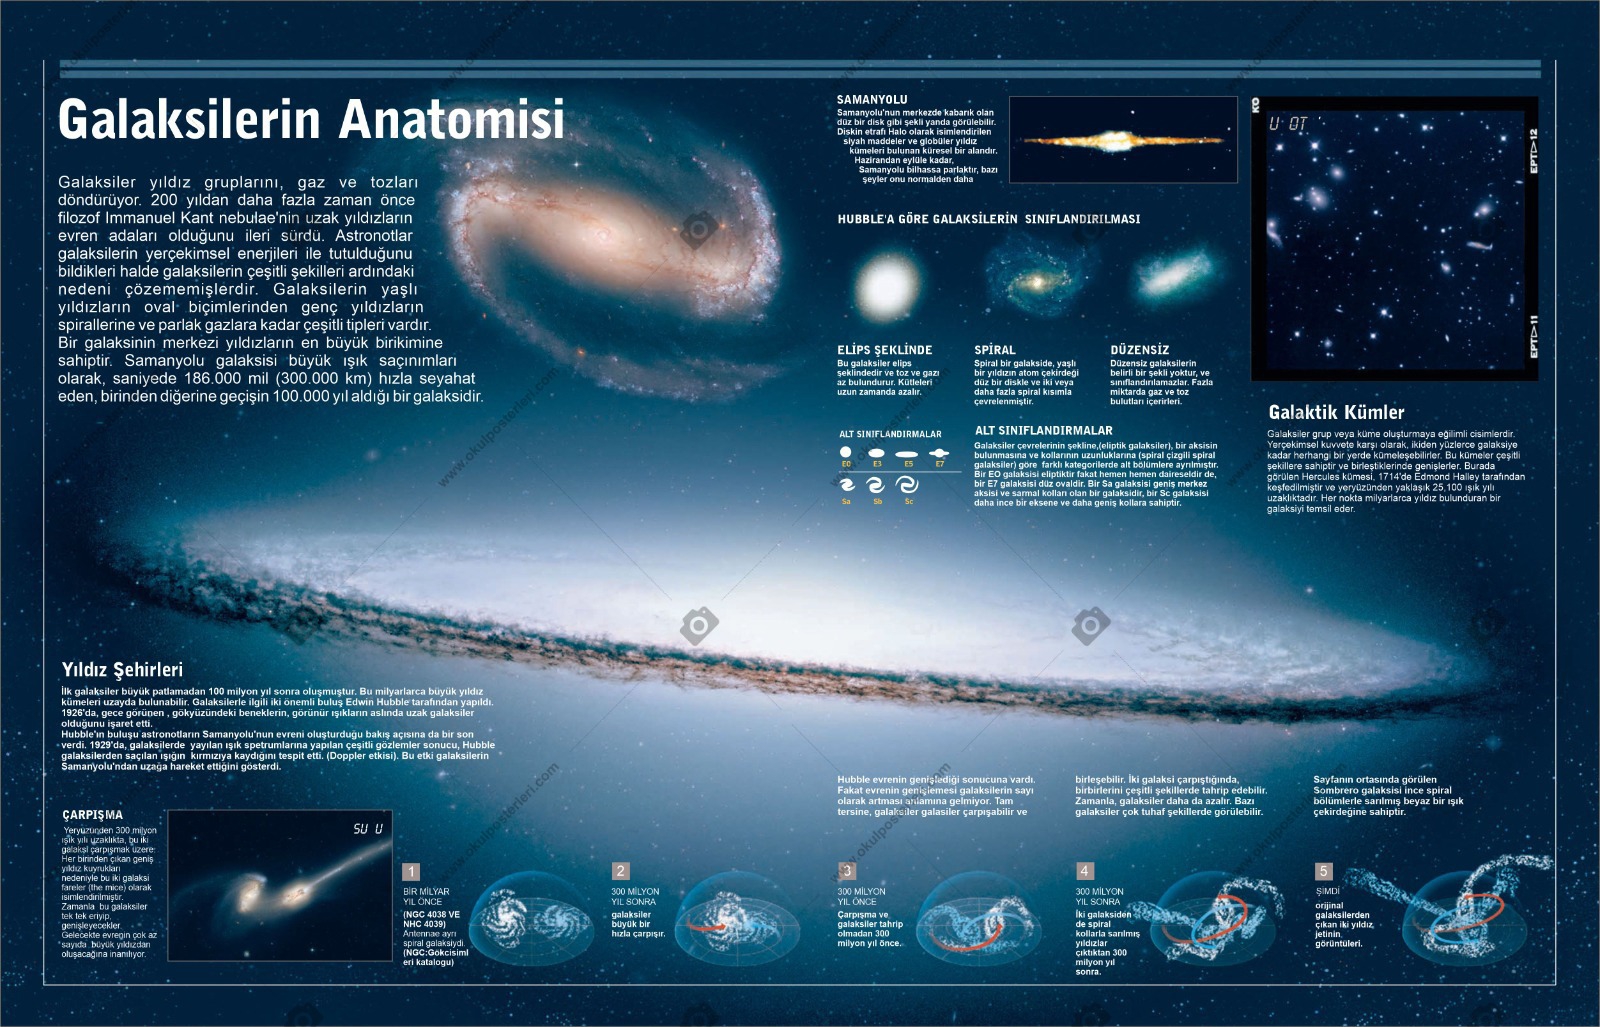 Galaksilerin Anatomisi Okul Posteri